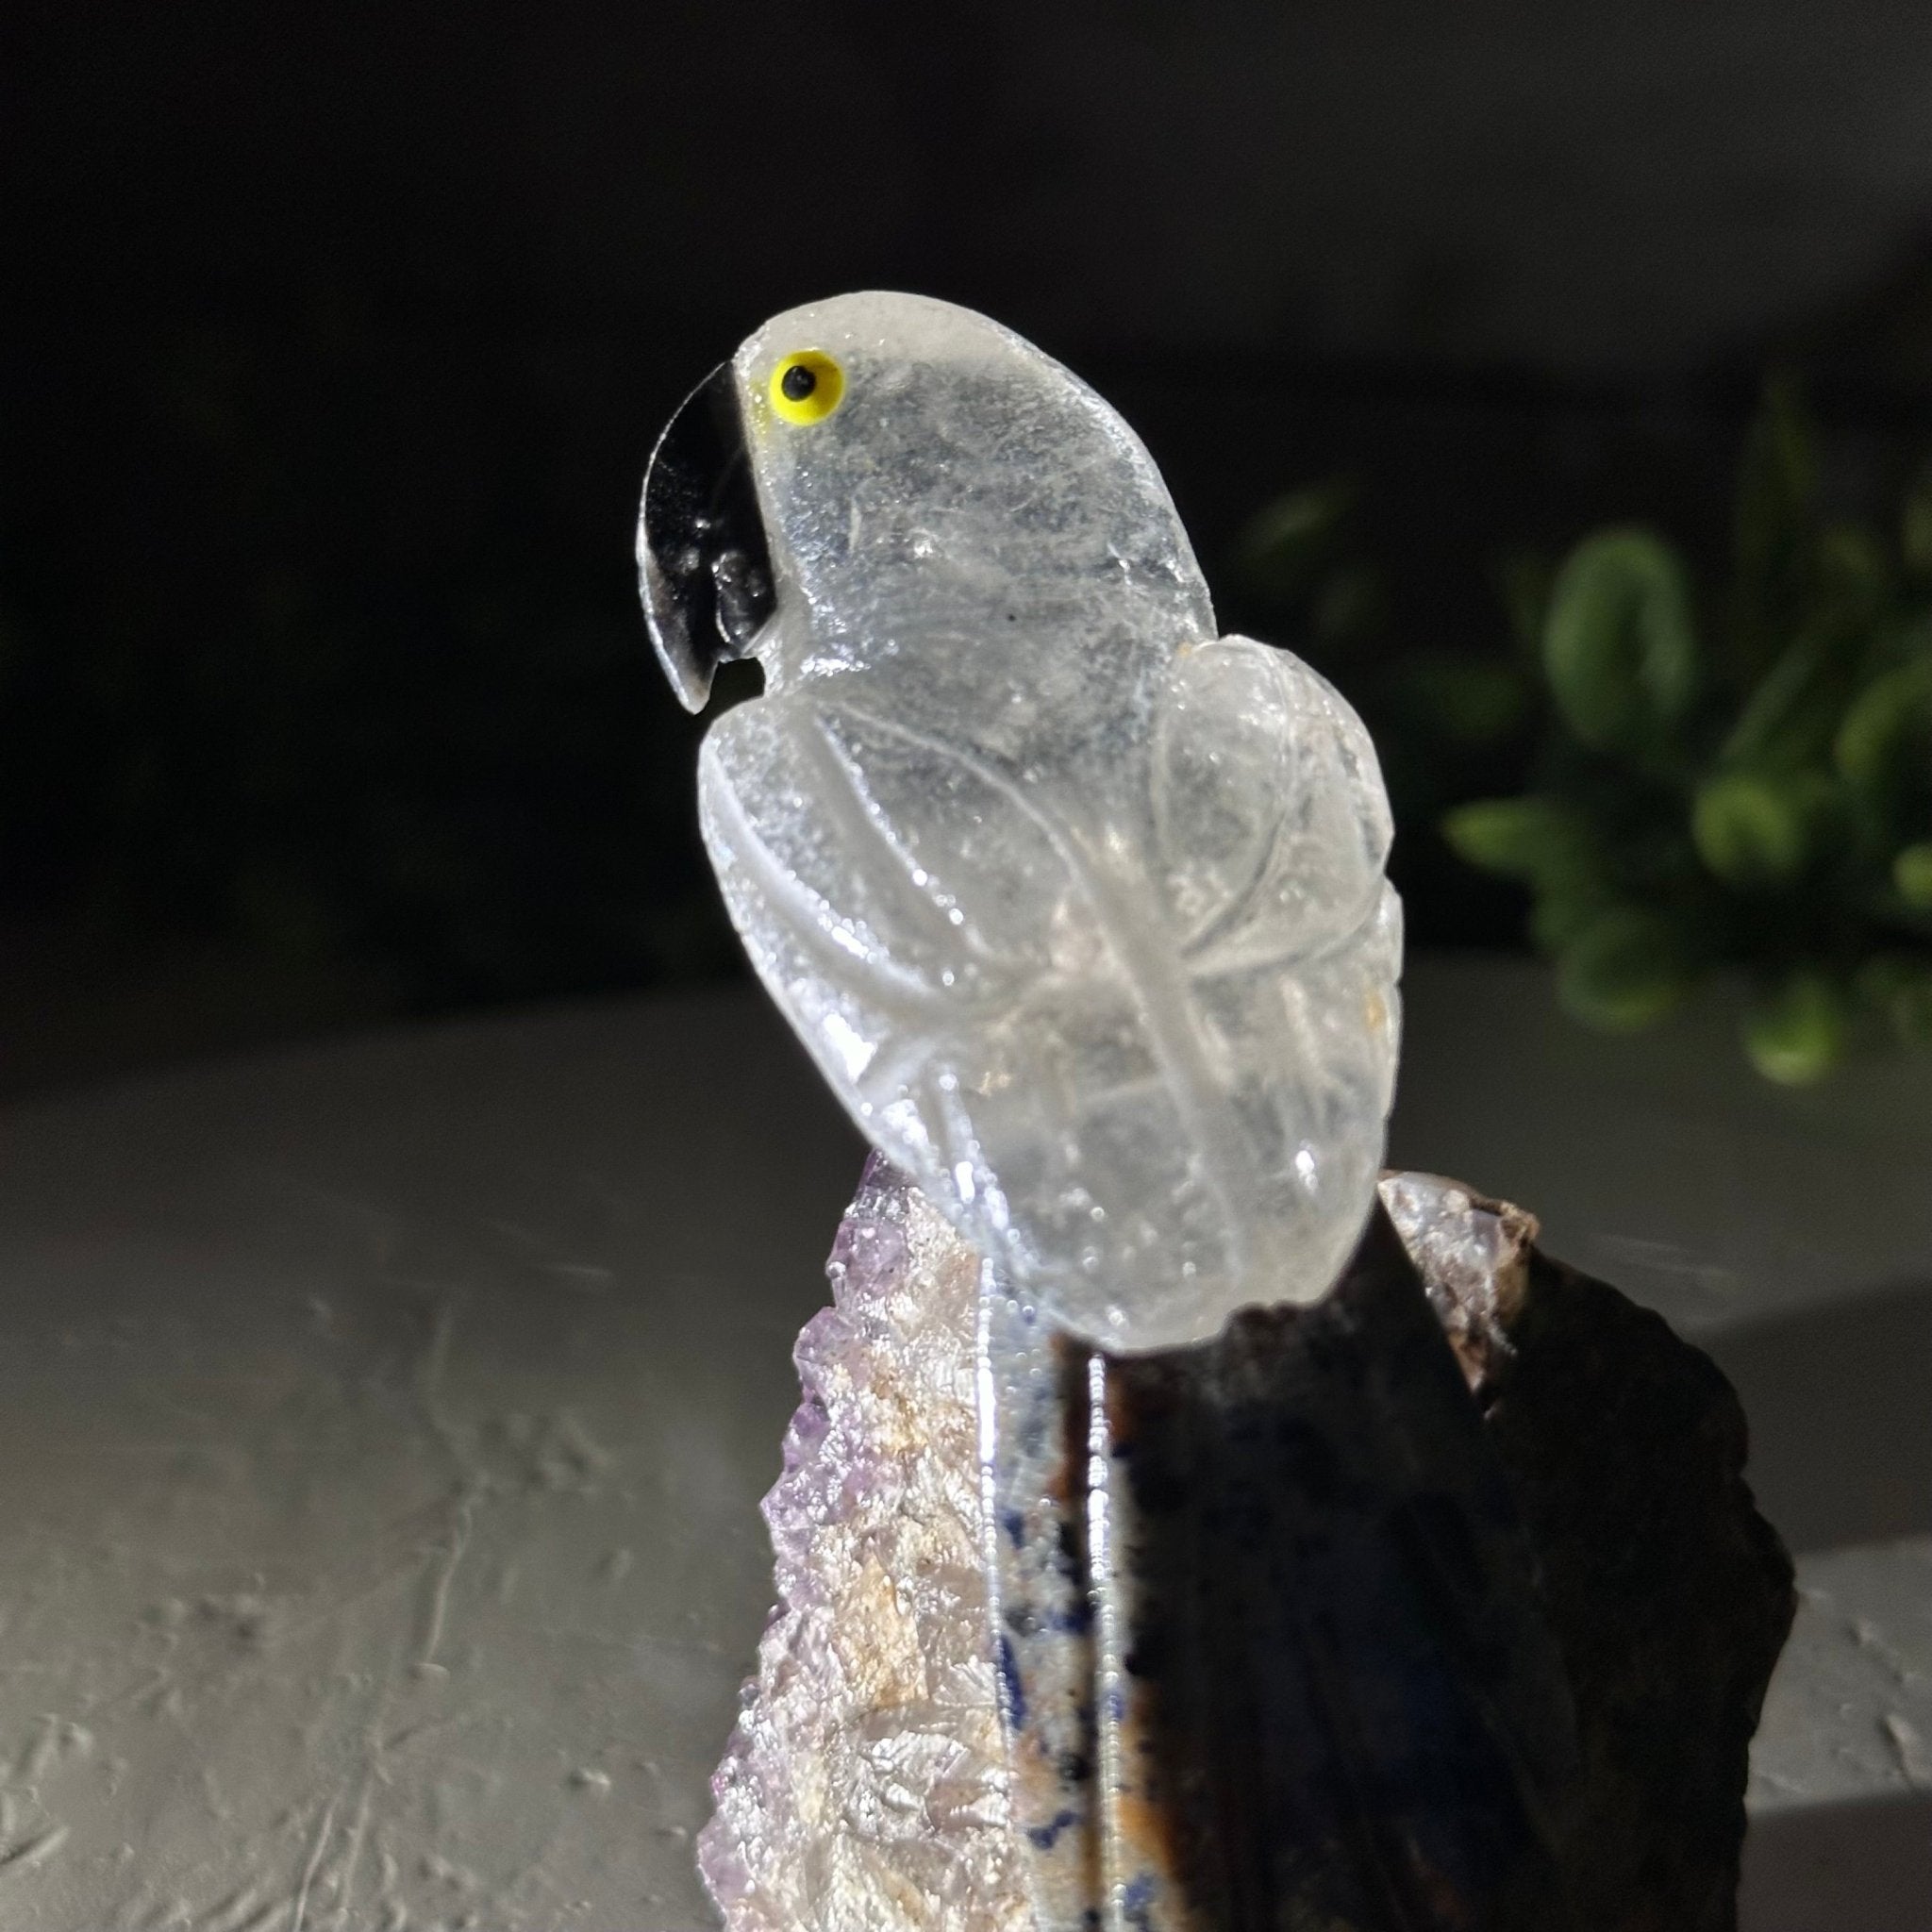 Hand-Carved Crystal Bird, Clear Quartz Parrot, Amethyst Base, 3.6" Tall #3001-CQPAM-018 - Brazil GemsBrazil GemsHand-Carved Crystal Bird, Clear Quartz Parrot, Amethyst Base, 3.6" Tall #3001-CQPAM-018Crystal Birds3001-CQPAM-018